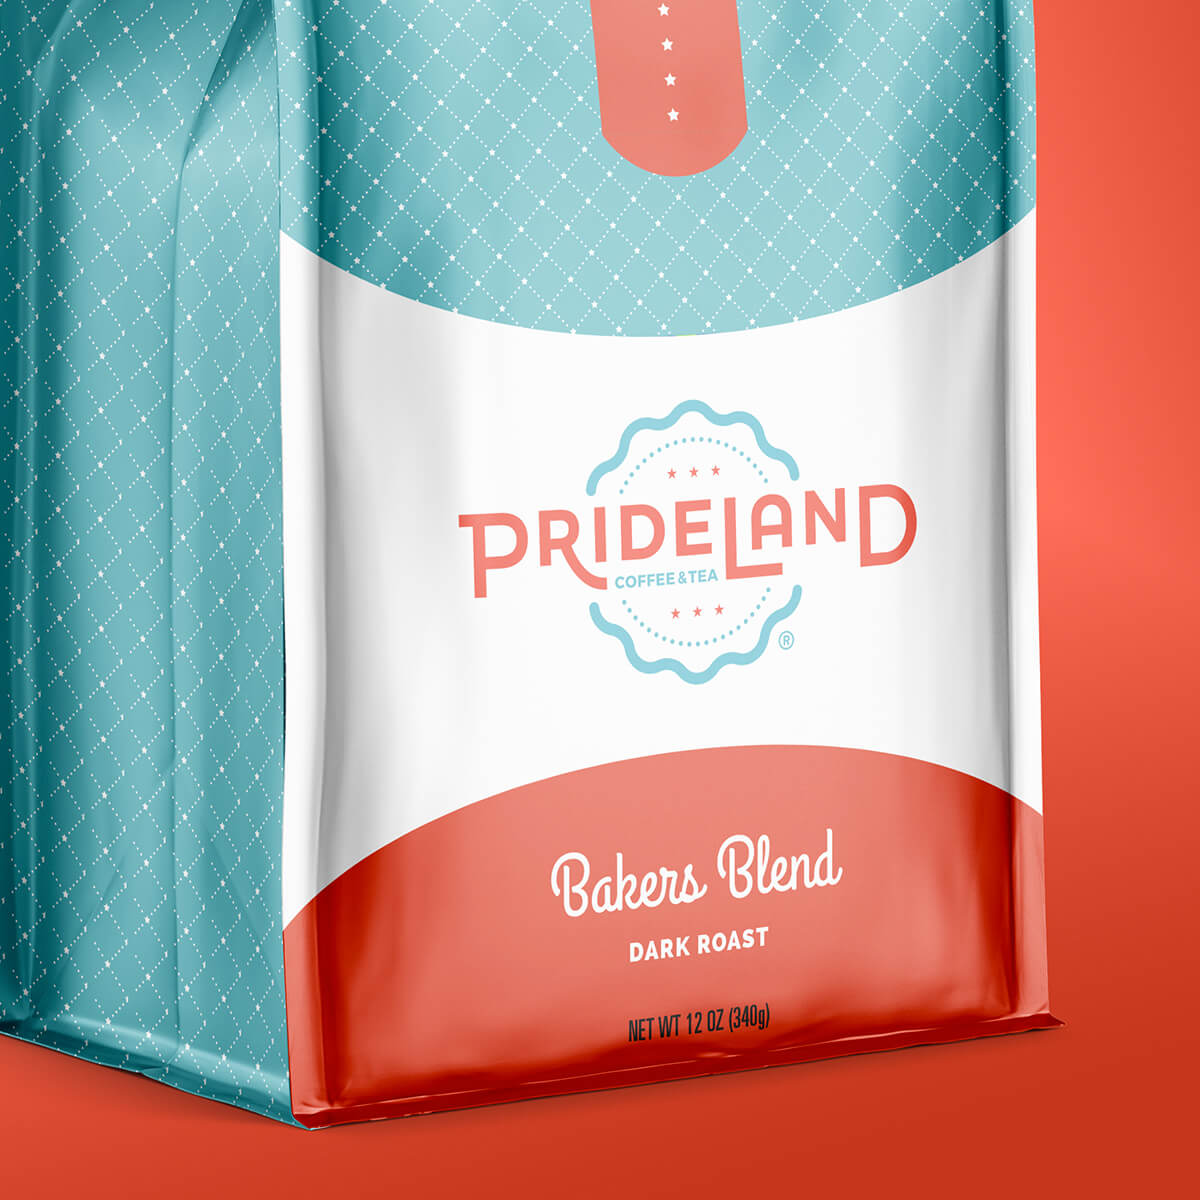 Prideland Bakers Blend